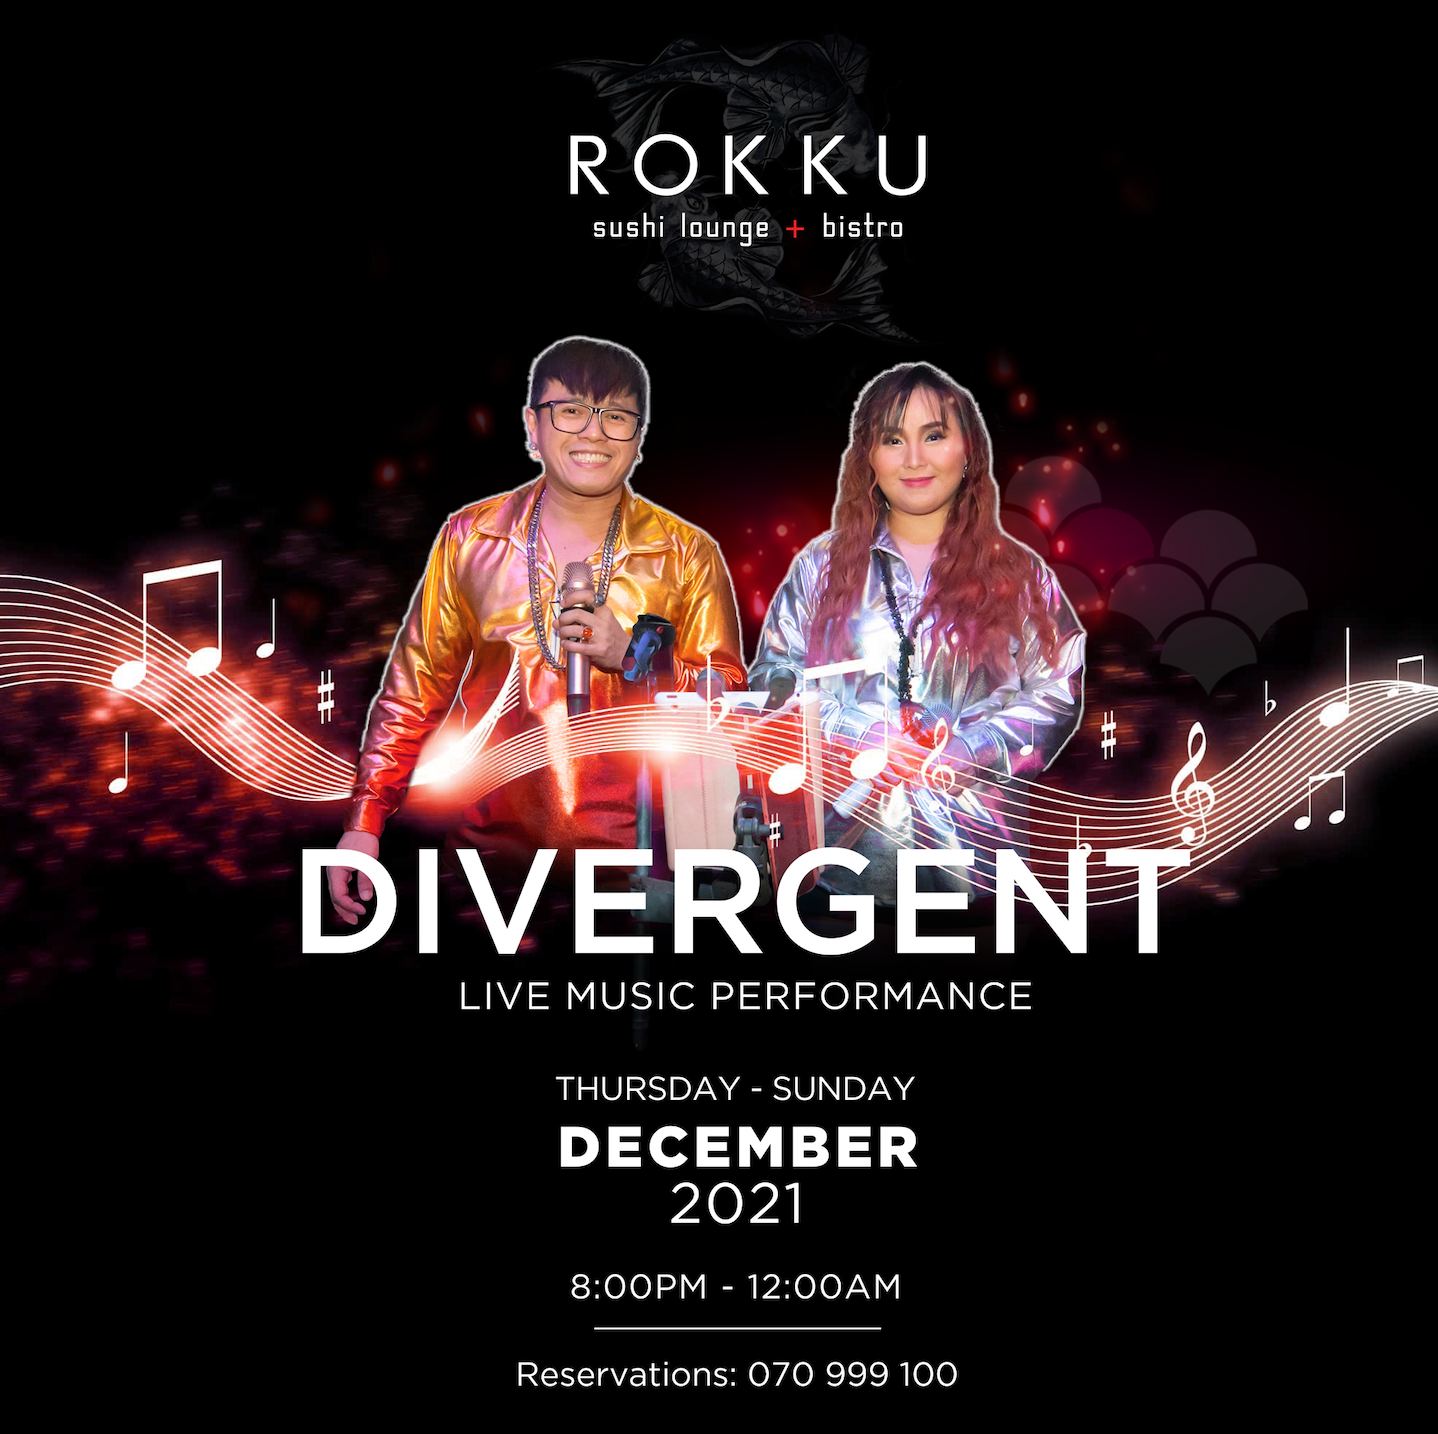 DIVERGENT LIVE MUSIC PERFORMANCE AT ROKKU ON THURSDAY – SUNDAY